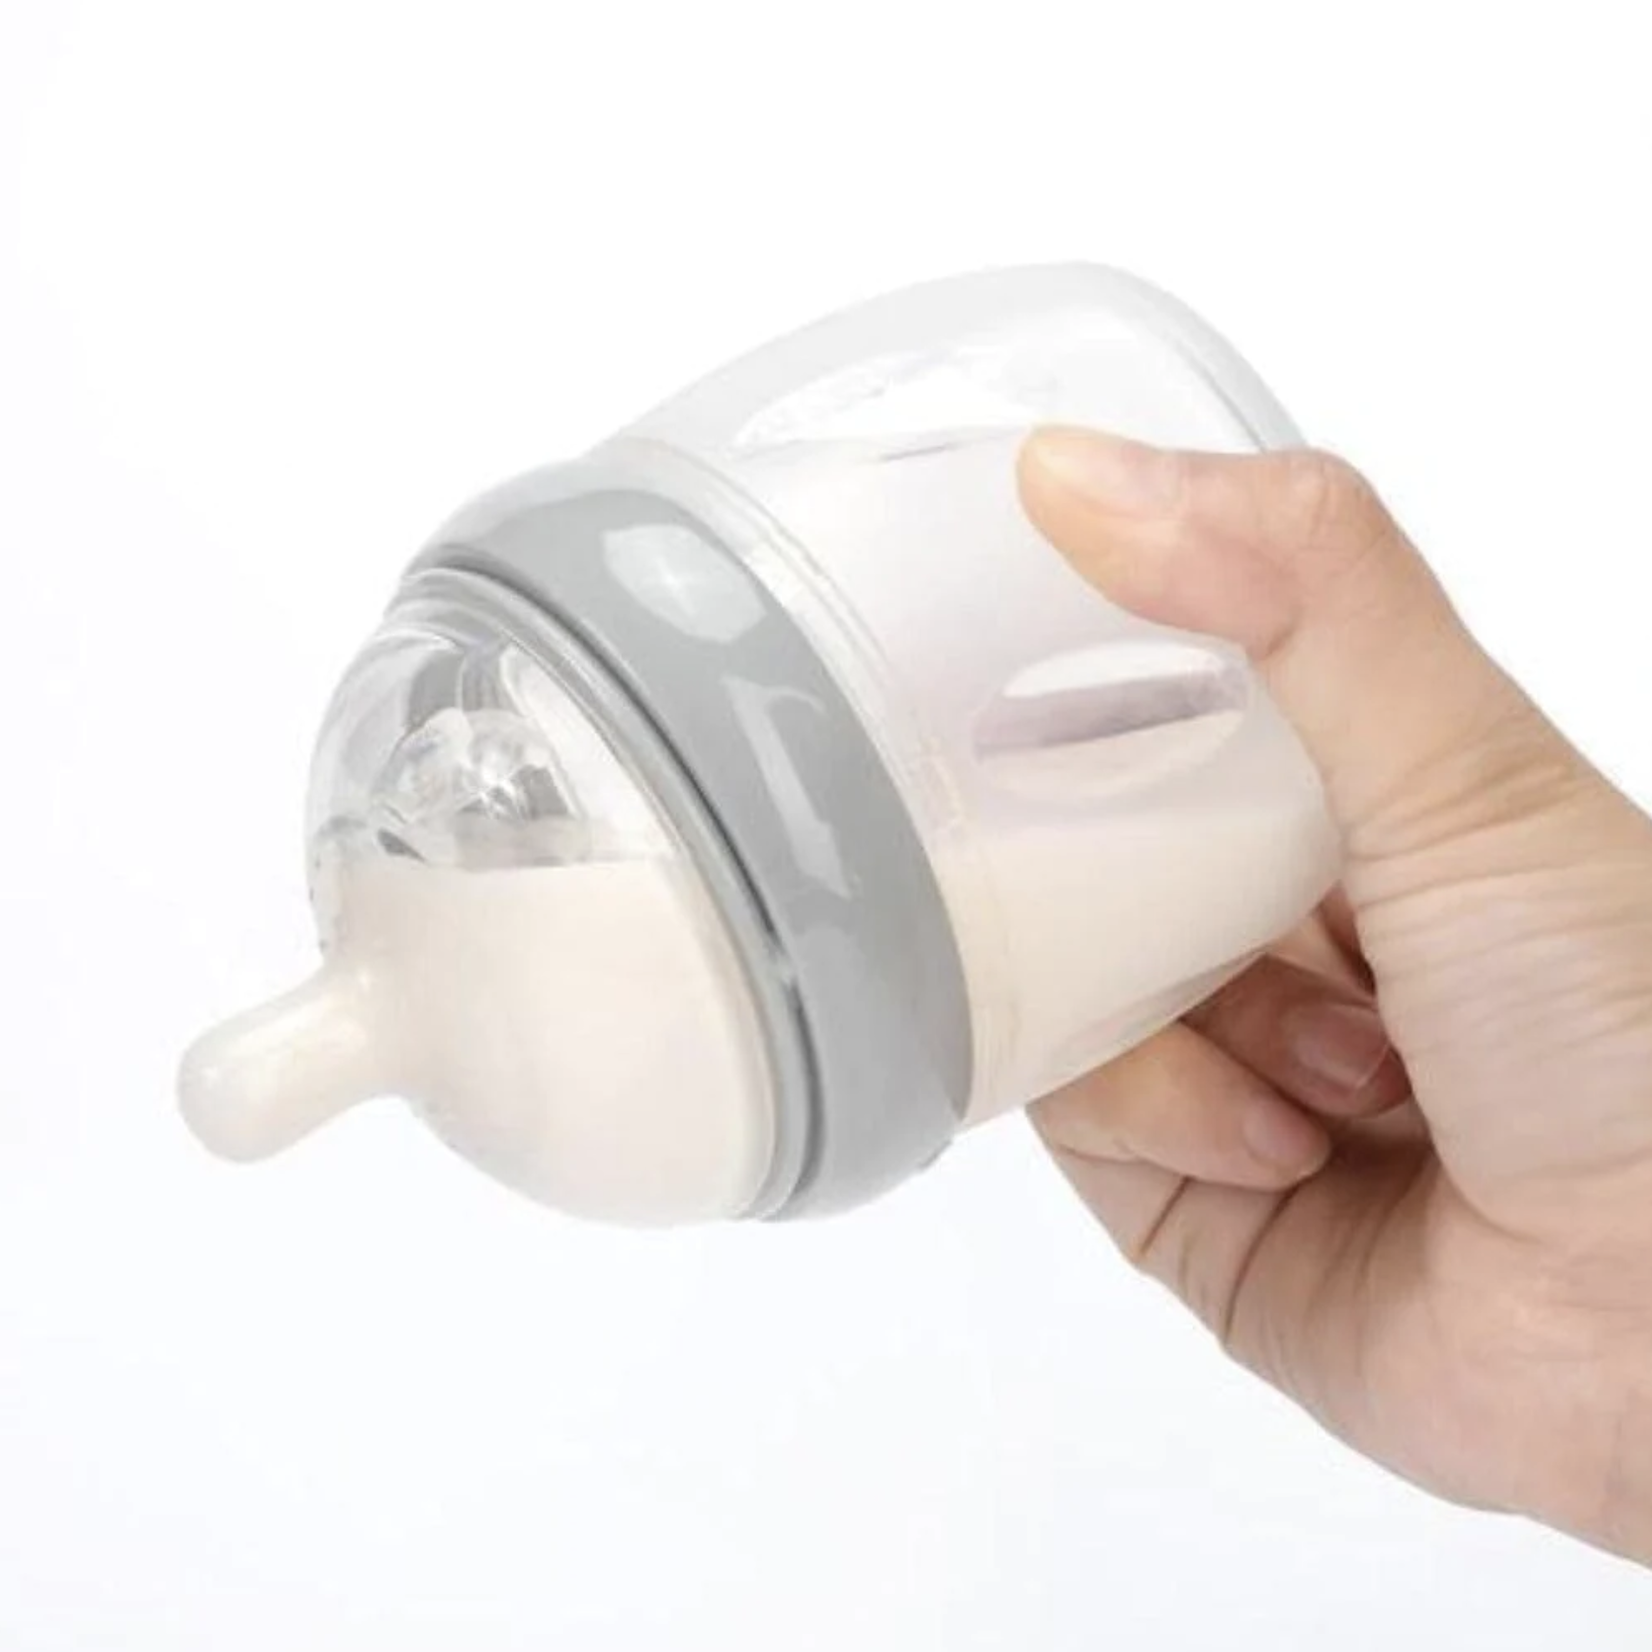 Haakaa Generation 3 Silicone Baby Bottle-Nude 160ml(slow teat)